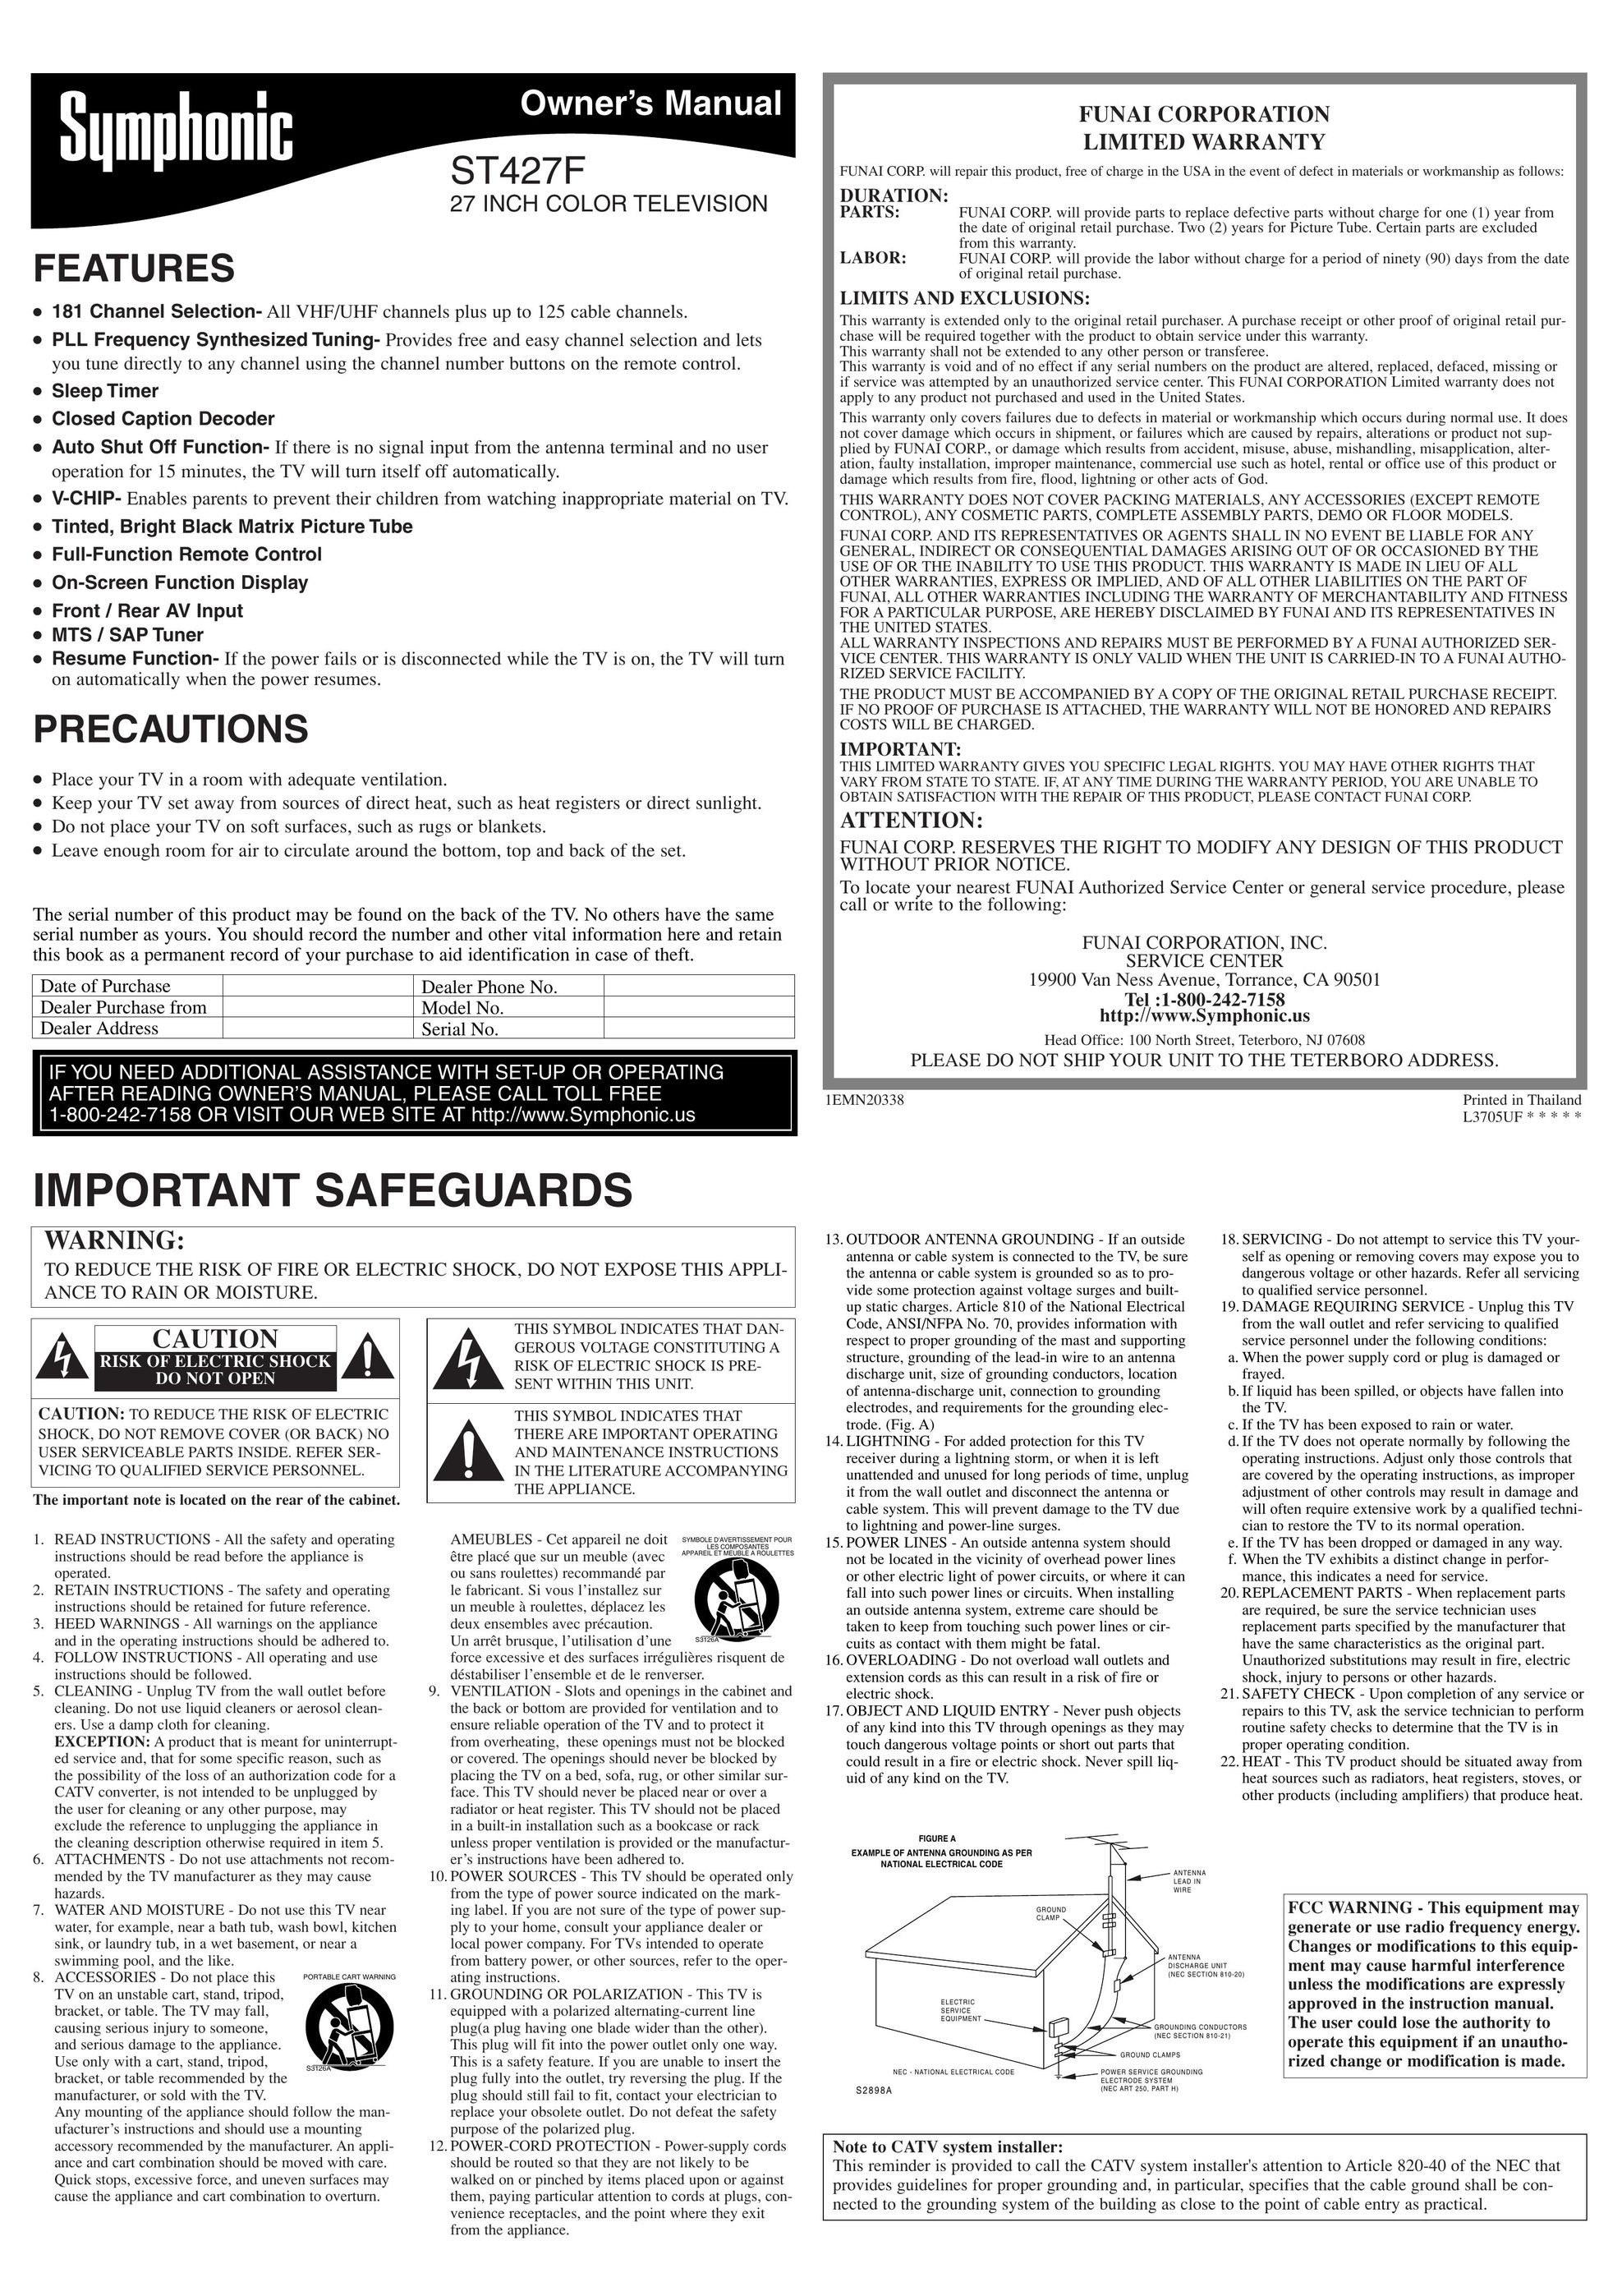 Symphonic ST427F CRT Television User Manual